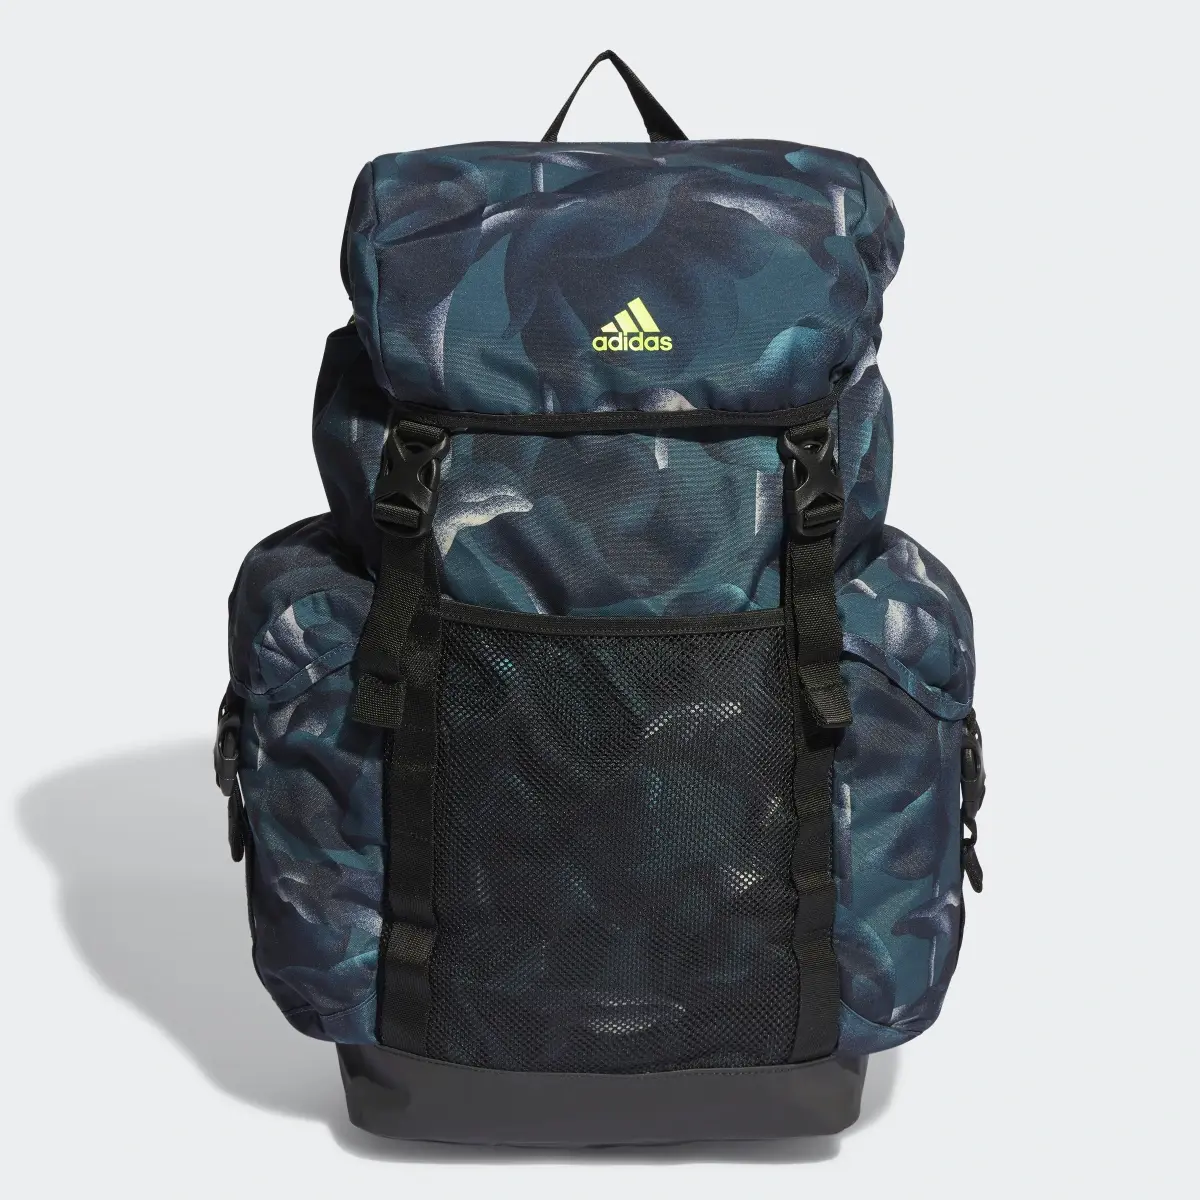 Adidas X_PLR Backpack. 2